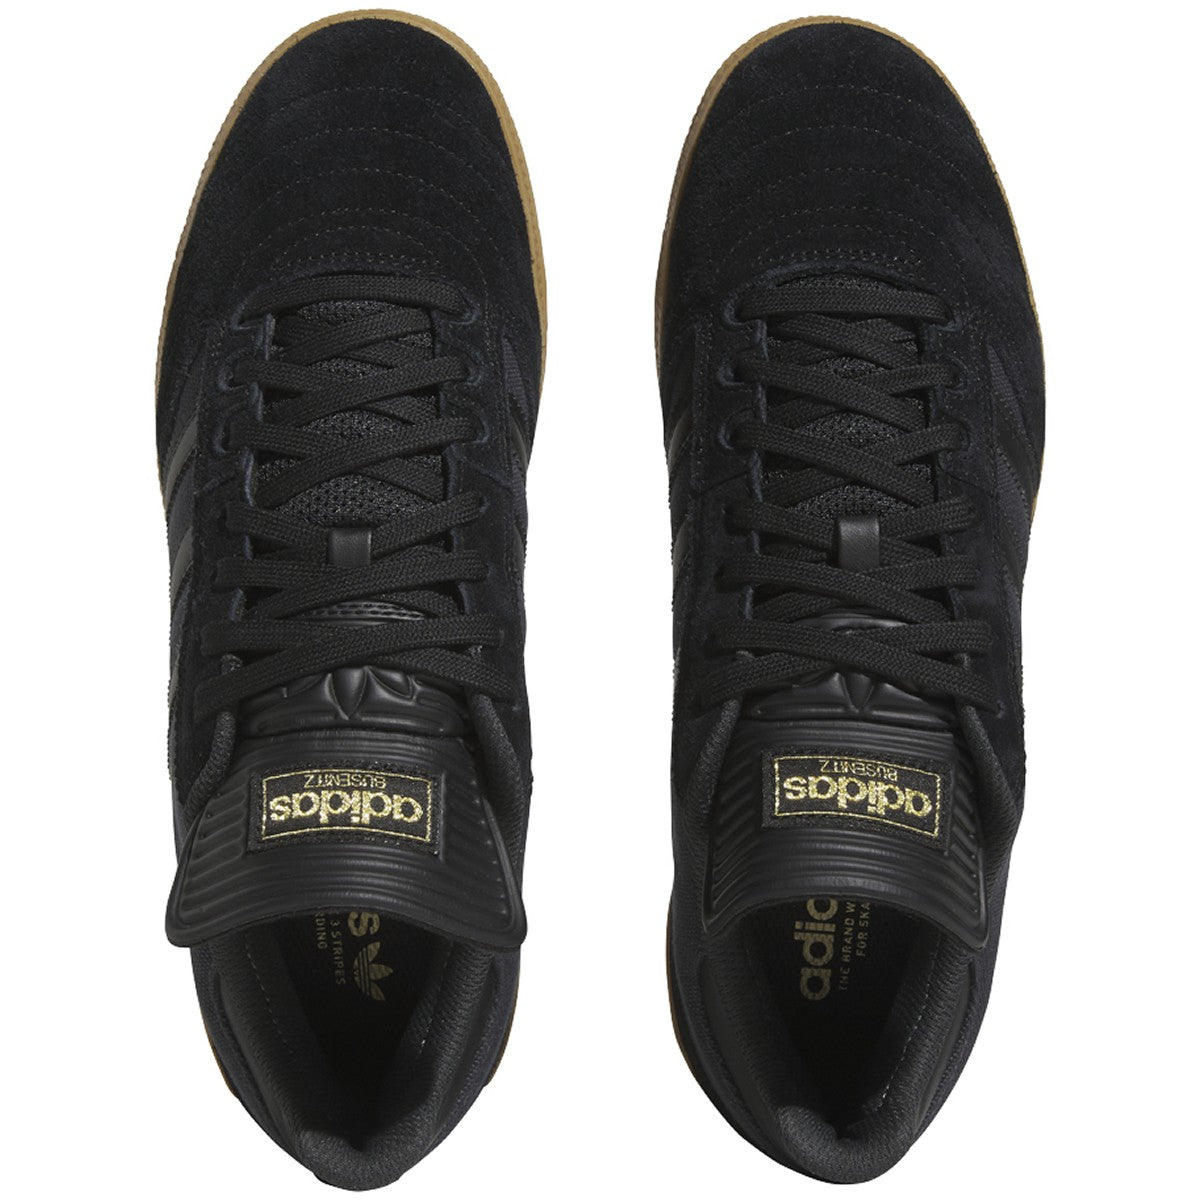 Core Black Busenitz Adidas Skateboarding Shoe Top